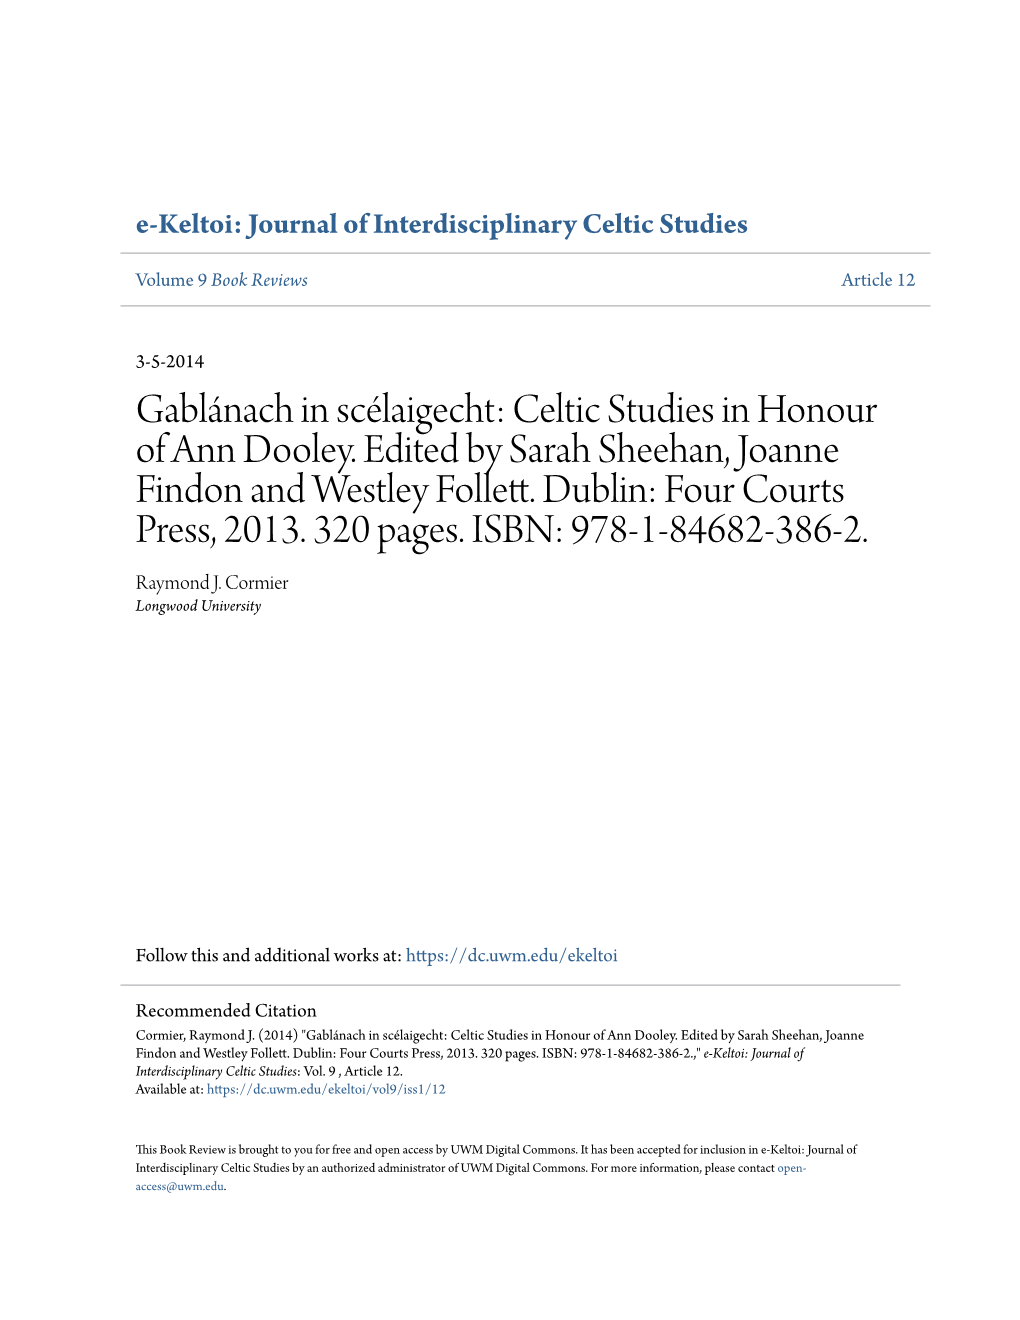 Celtic Studies in Honour of Ann Dooley